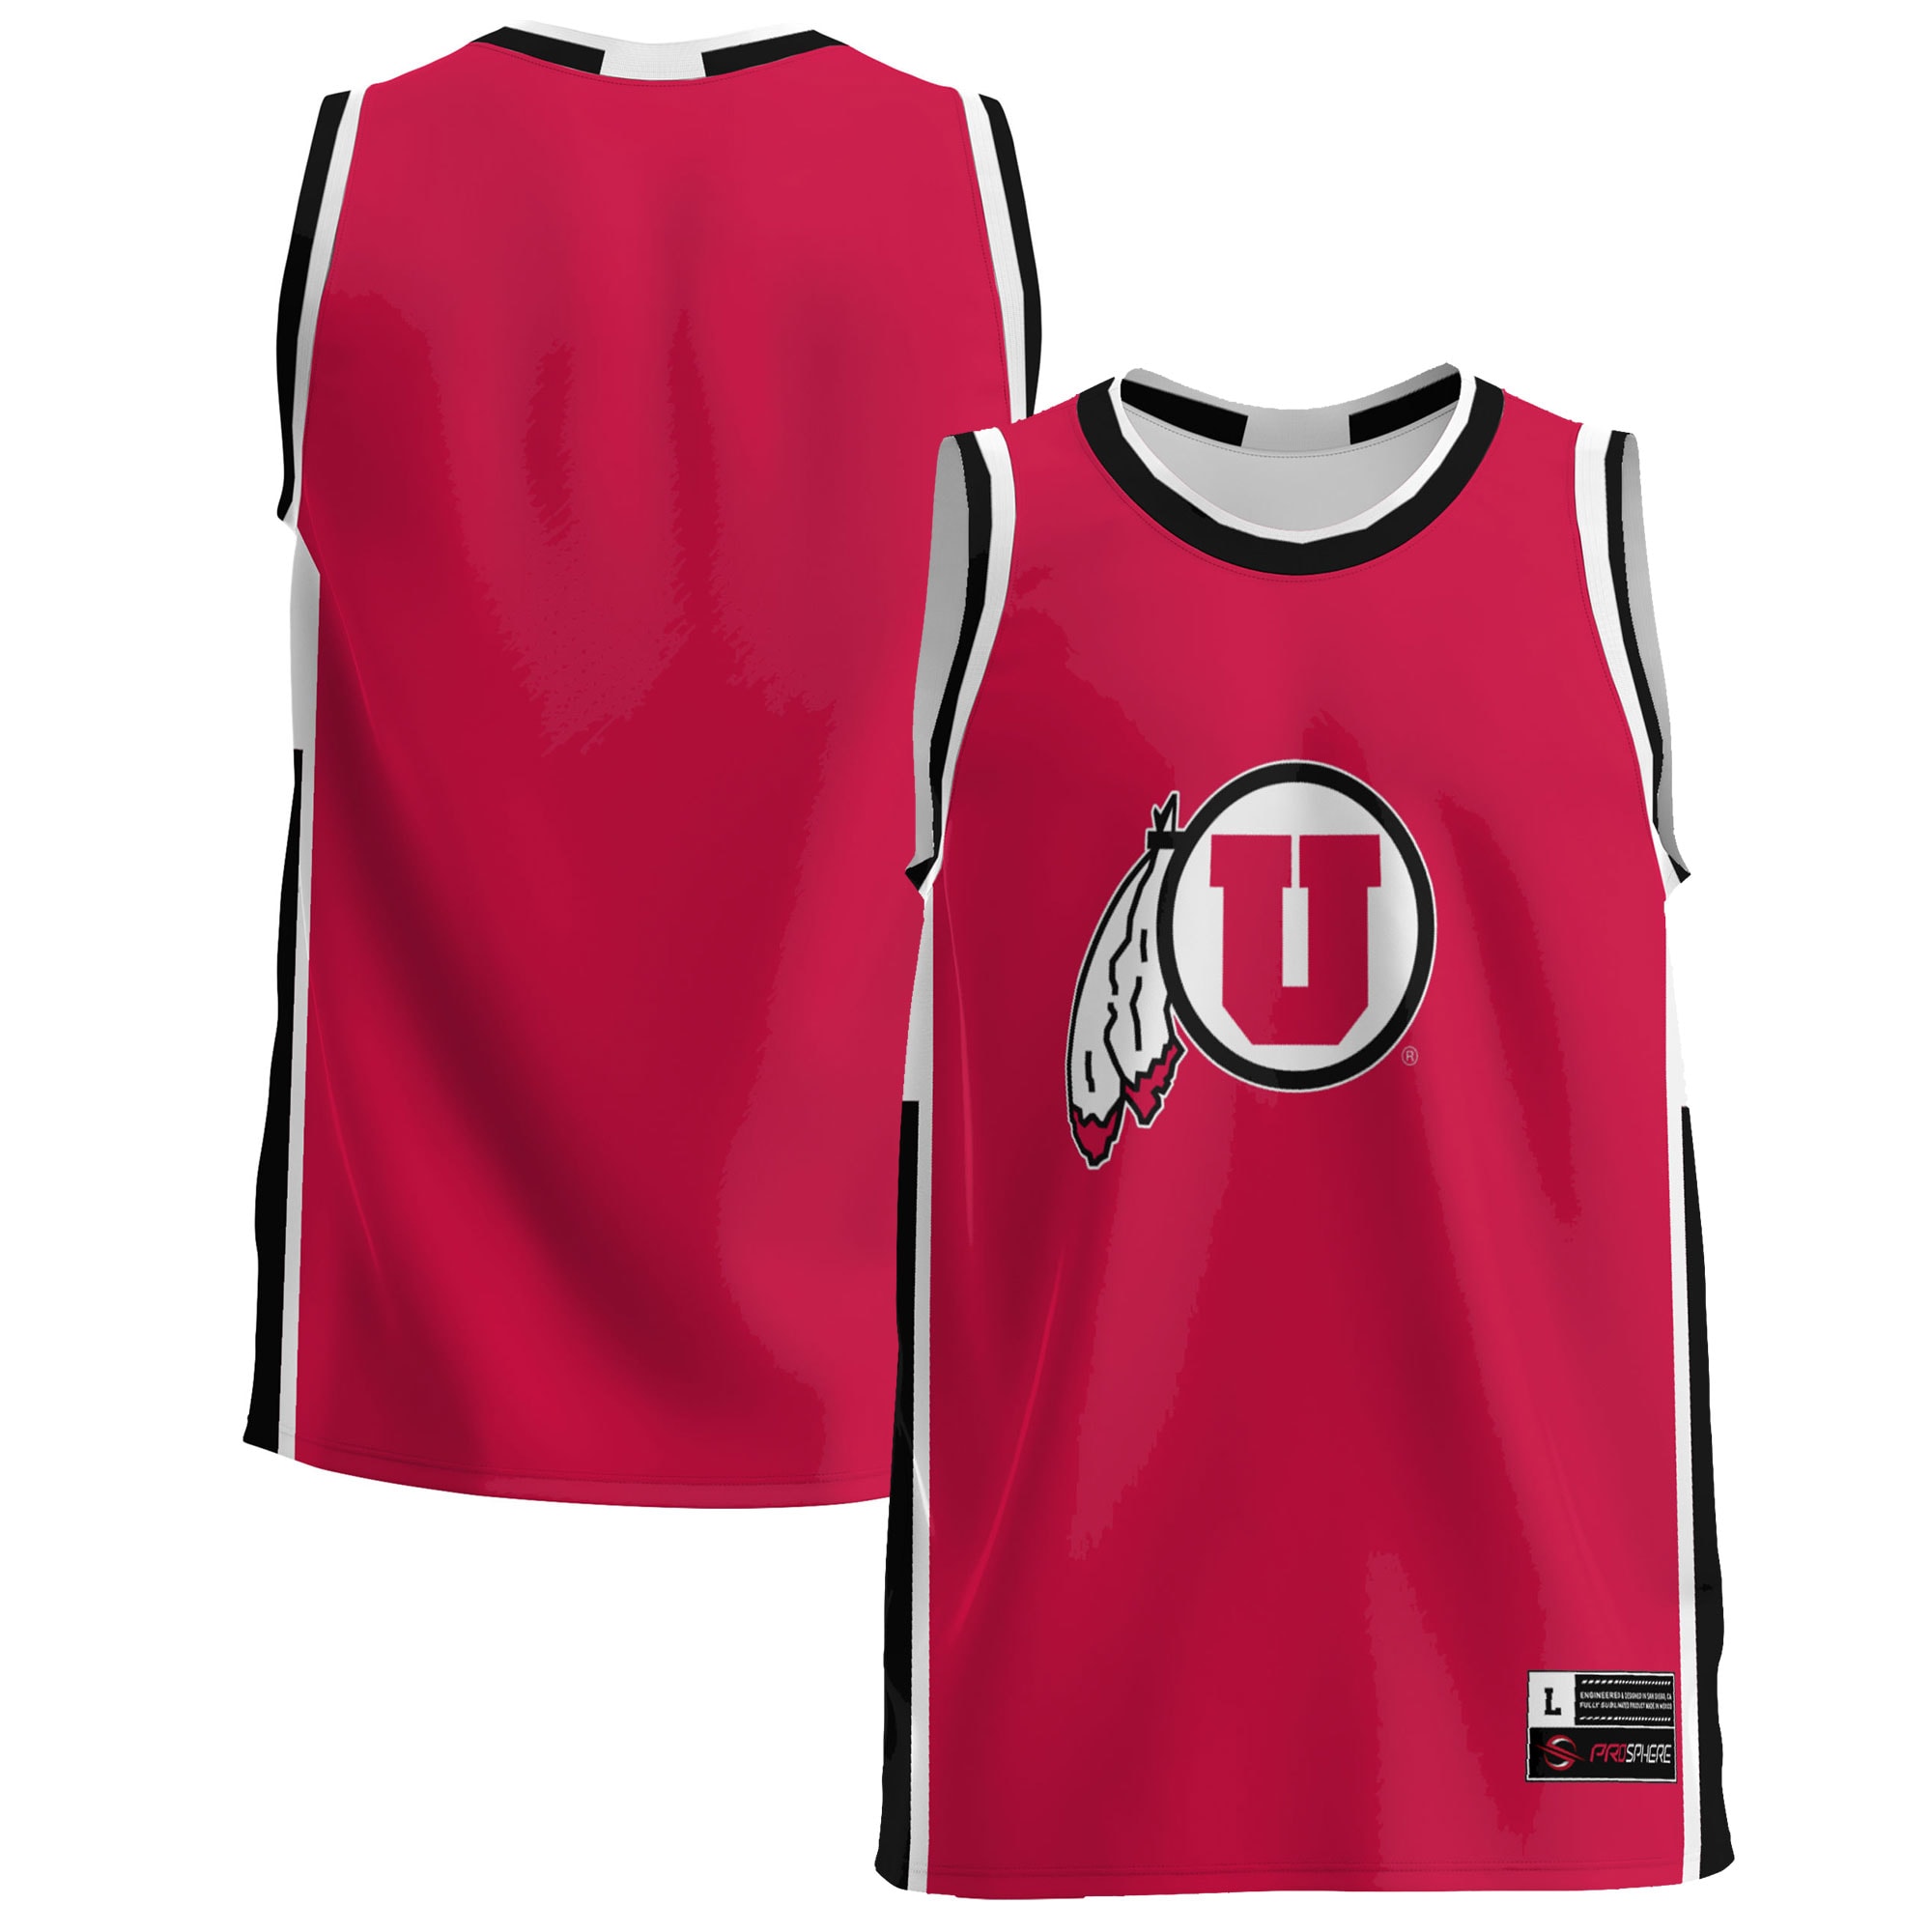 Utah Utes Basketball Jersey - Red For Youth Women Men